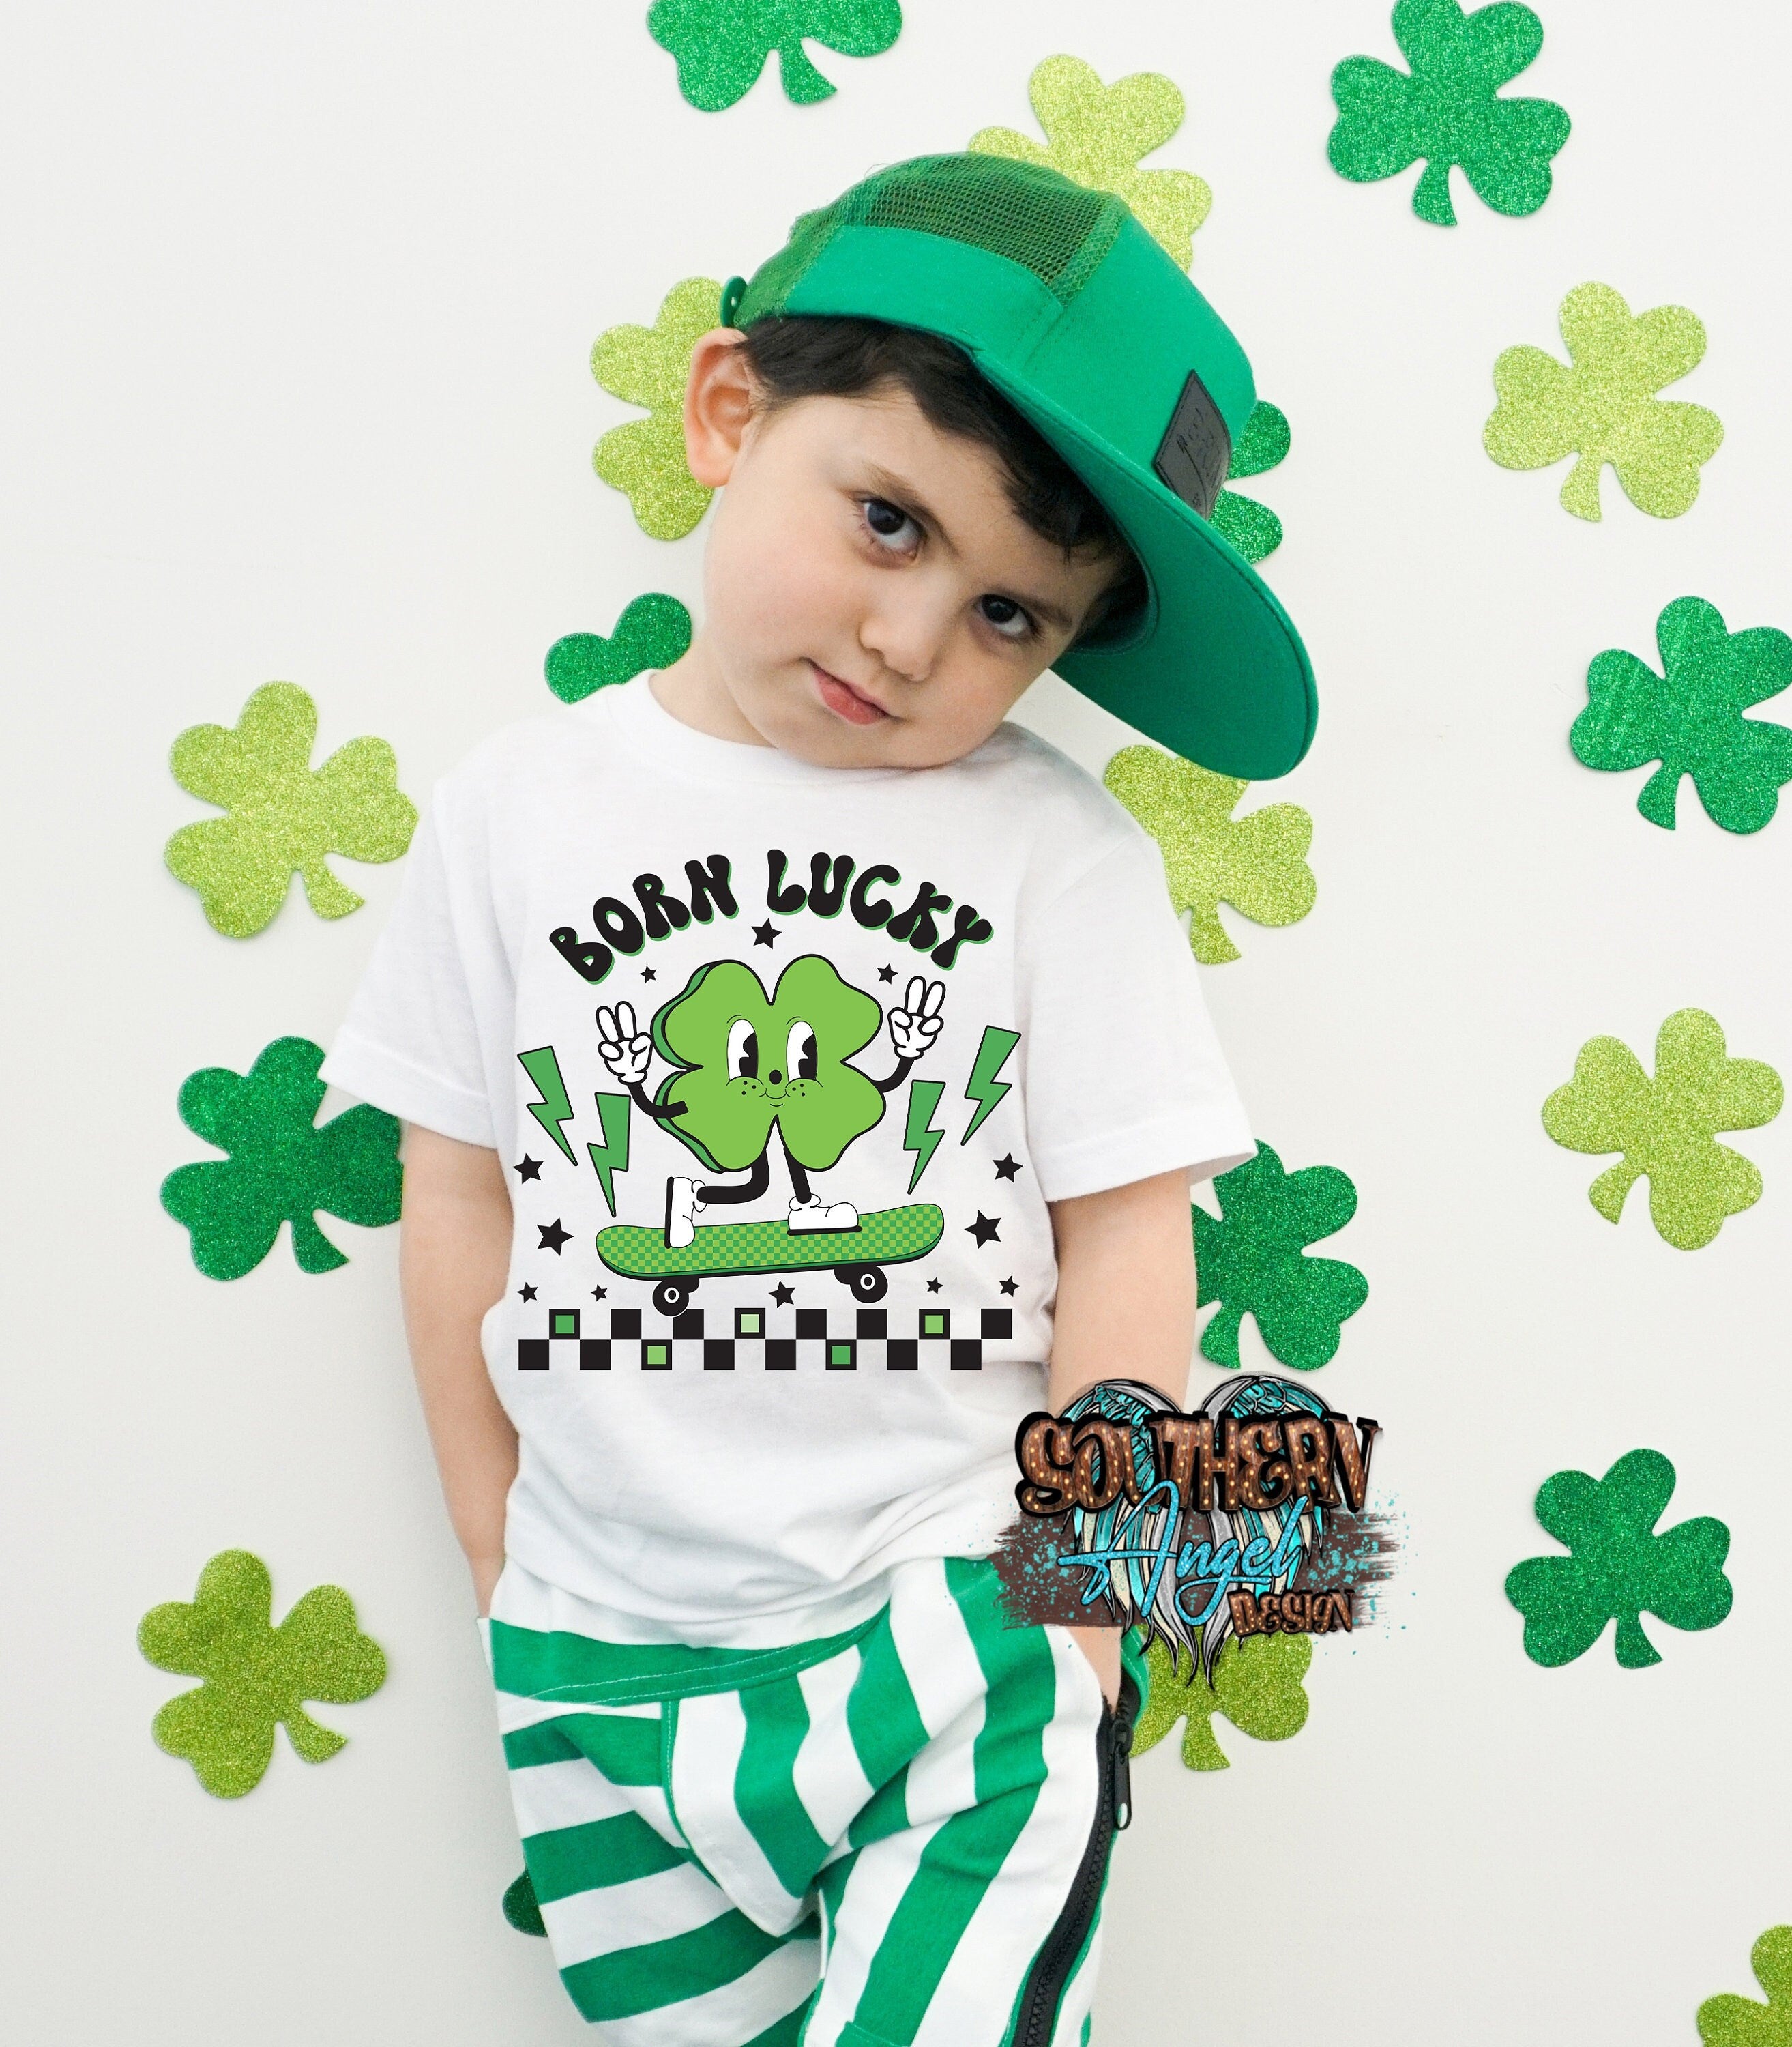 Born Lucky, Lucky Vibes shirt, Toddler St Patricks Day, Kids St Patricks shirt, Boys St Pattys, Girls St Pattys, Baby St Patricks Day outfit